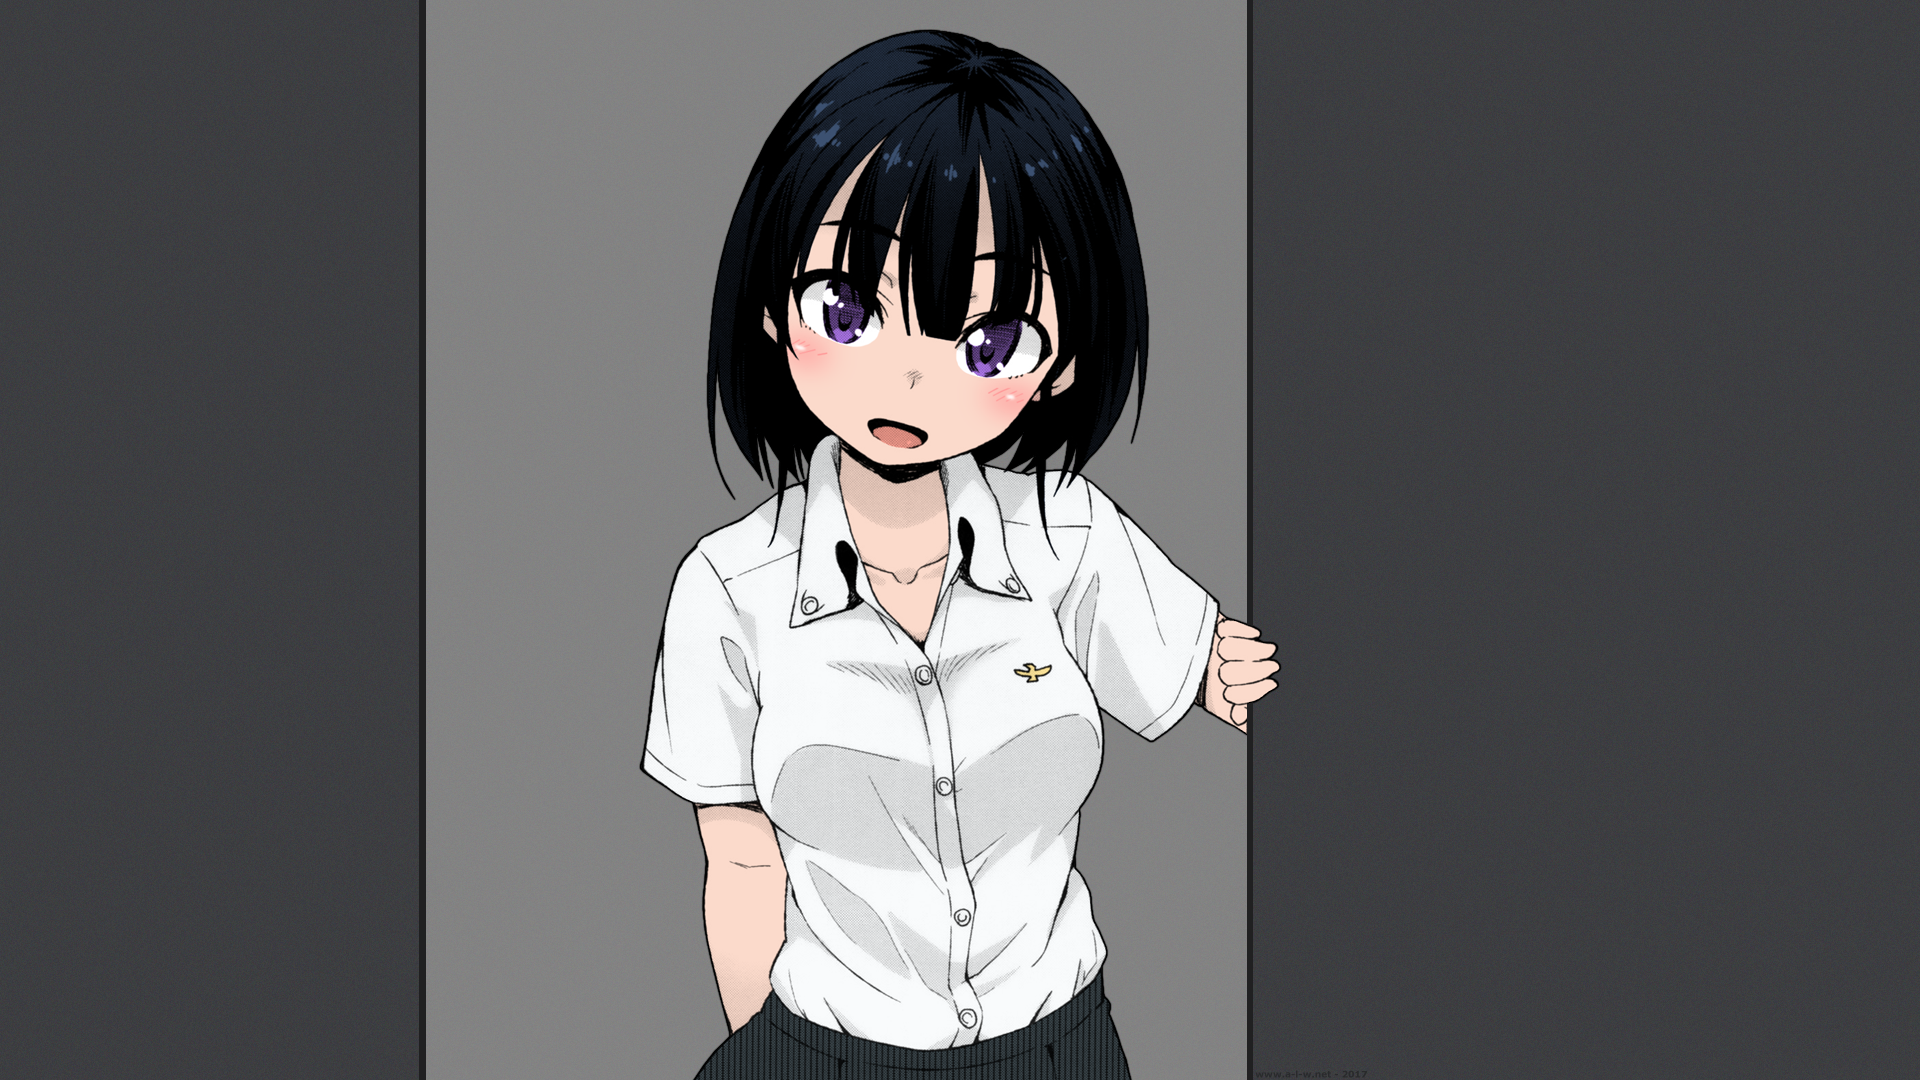 Anime 1920x1080 short hair purple eyes black hair schoolgirl school uniform smiling anime manga anime girls